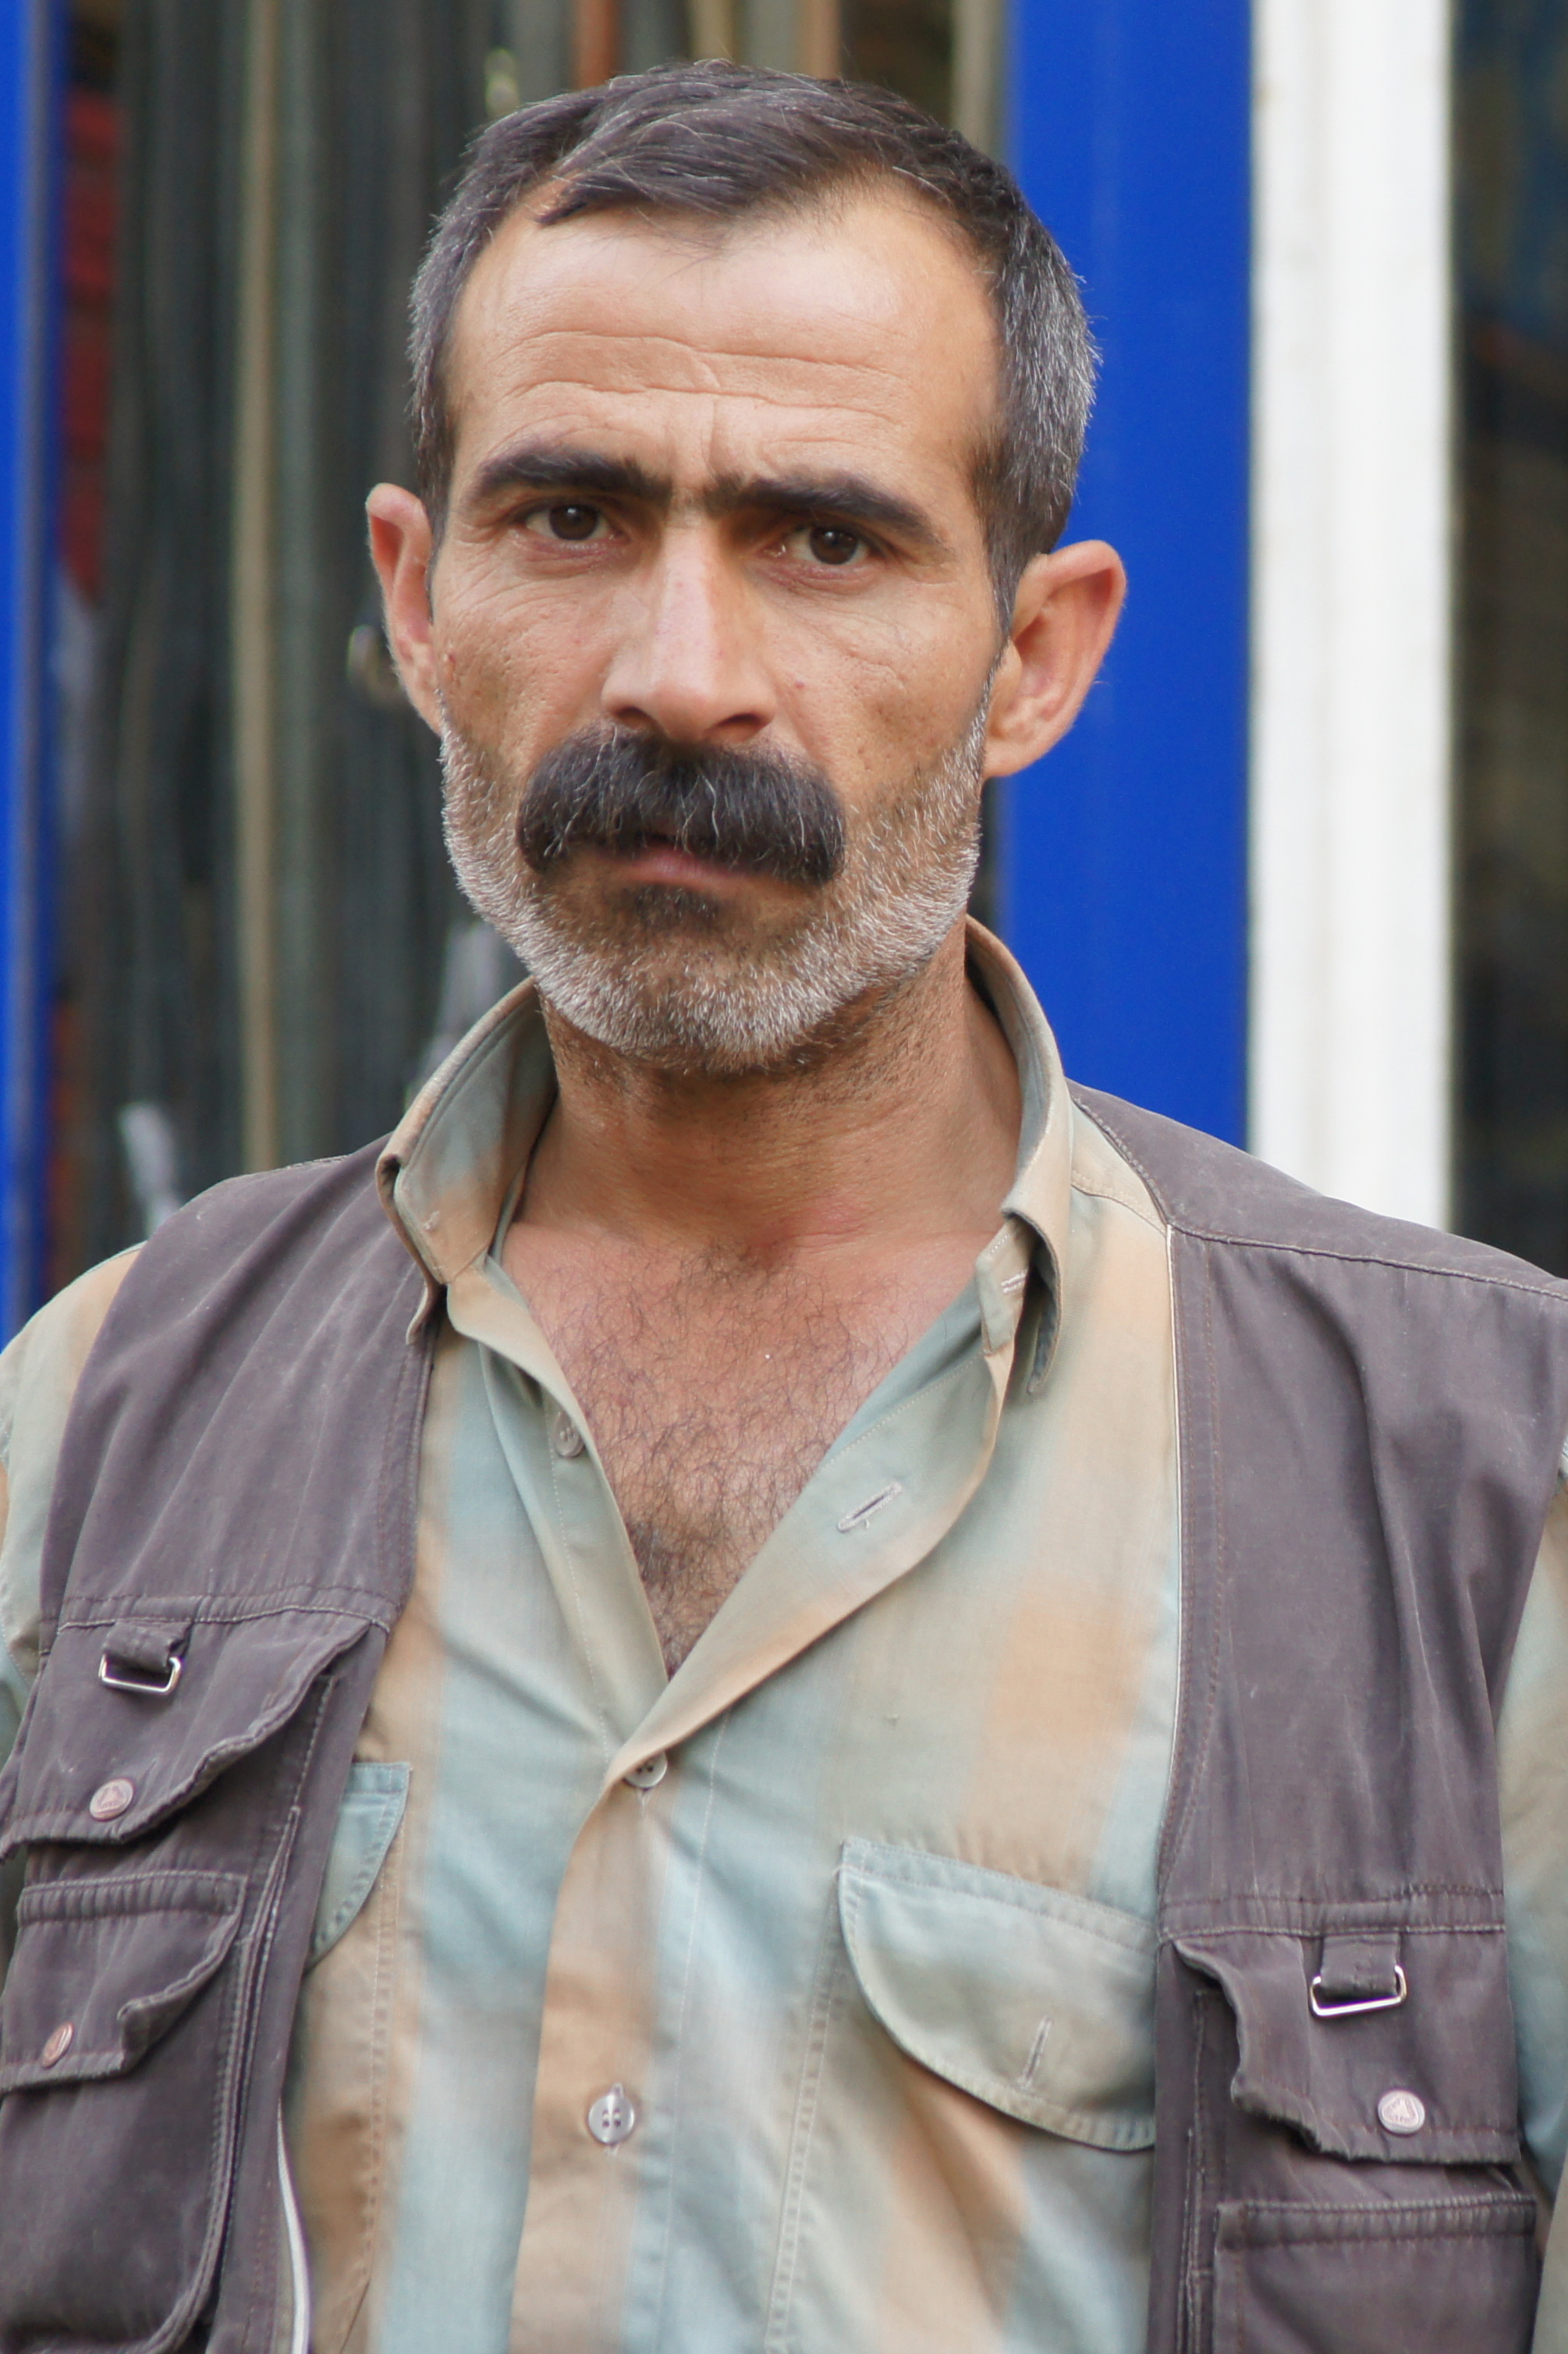 Classify This Kurd Man-3620